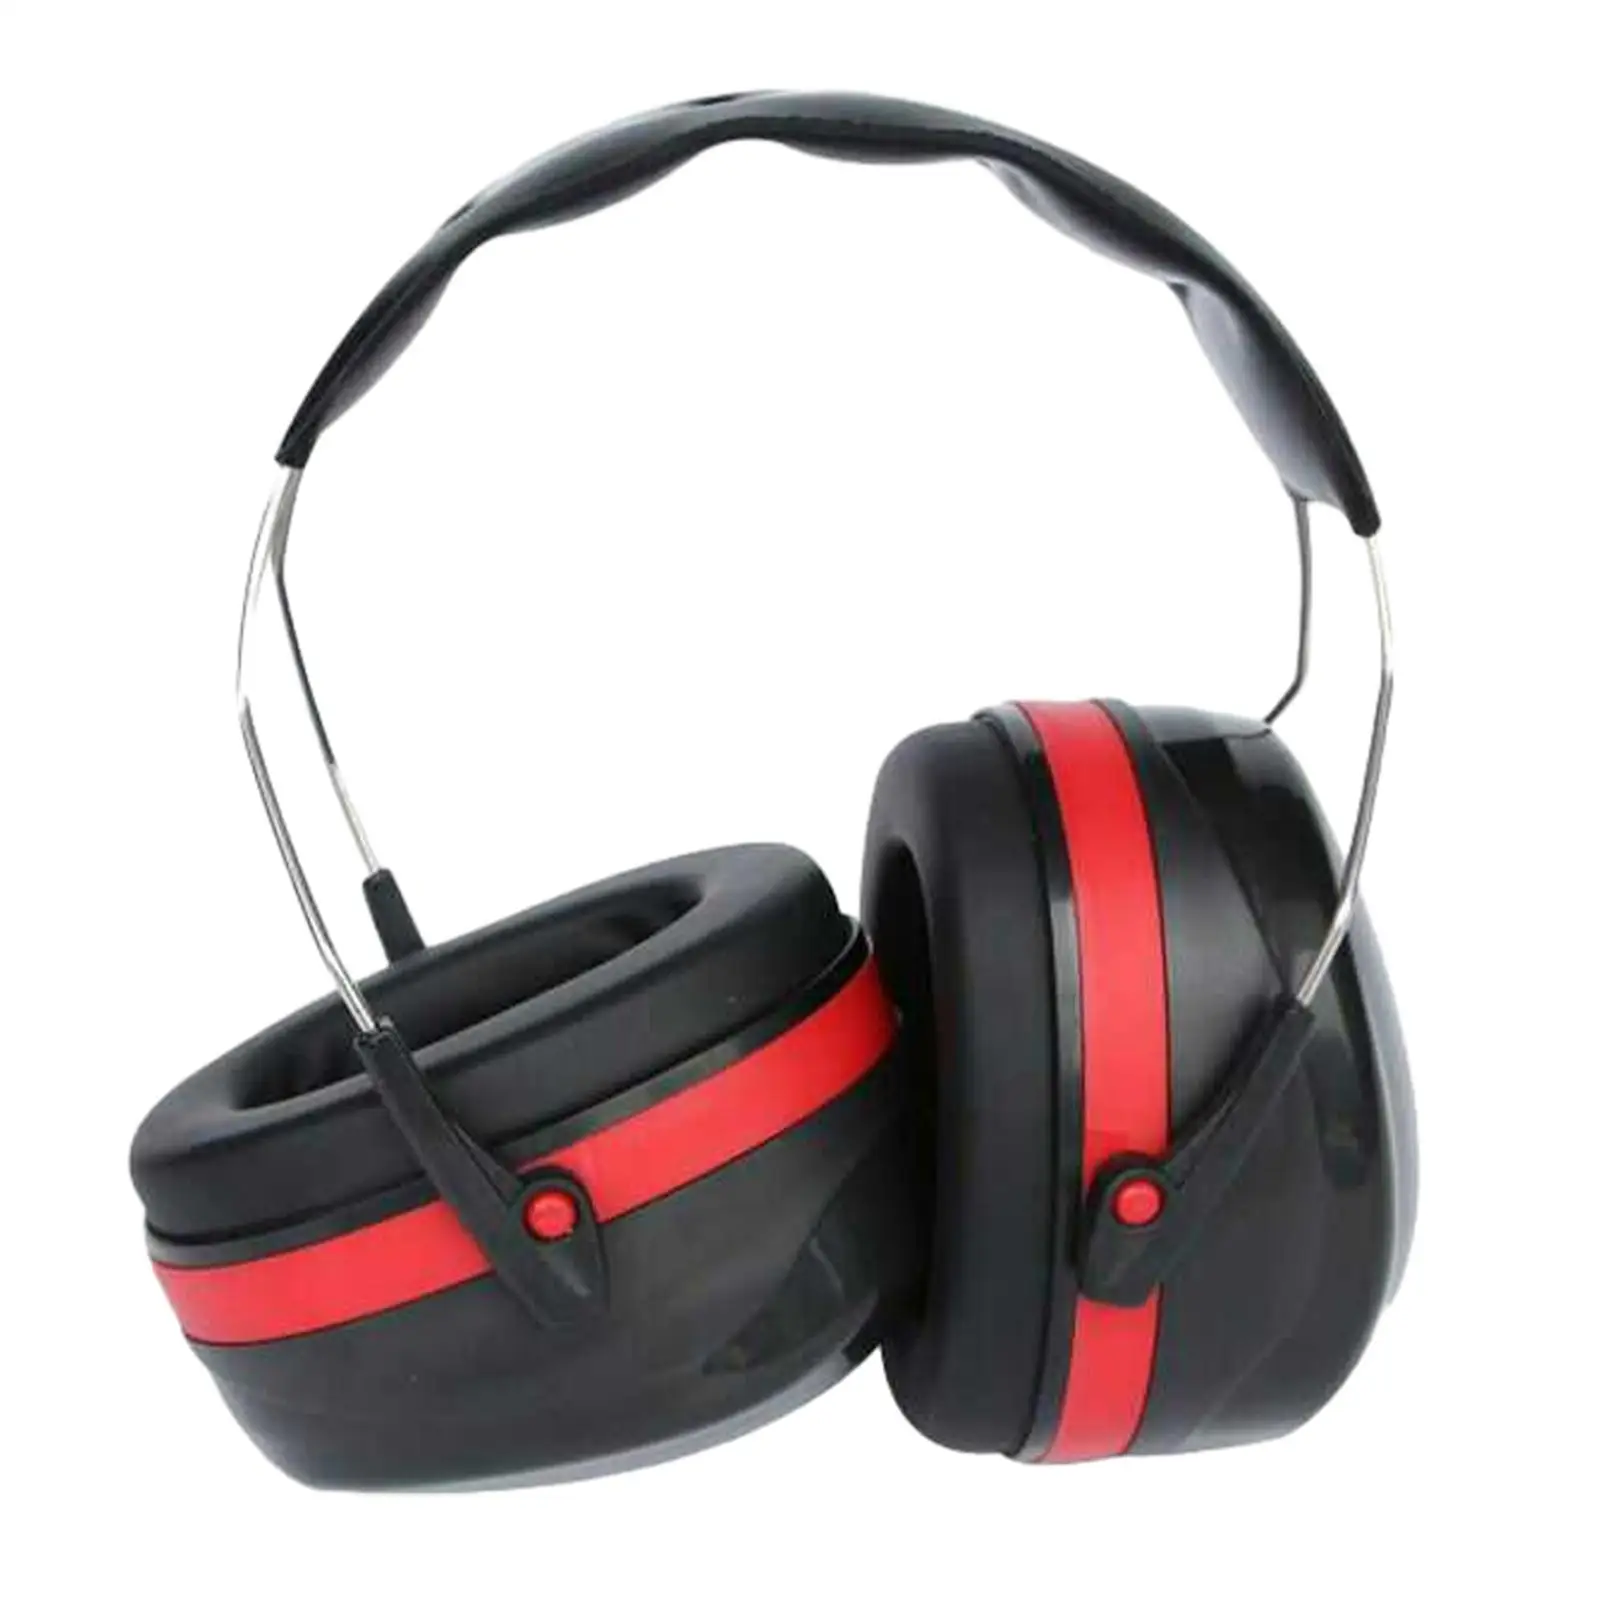 Noise Reduction Headphones Adjustable Headband Soft Cushion Foldable for Concerts House Decorating Sleeping Workshop Adults